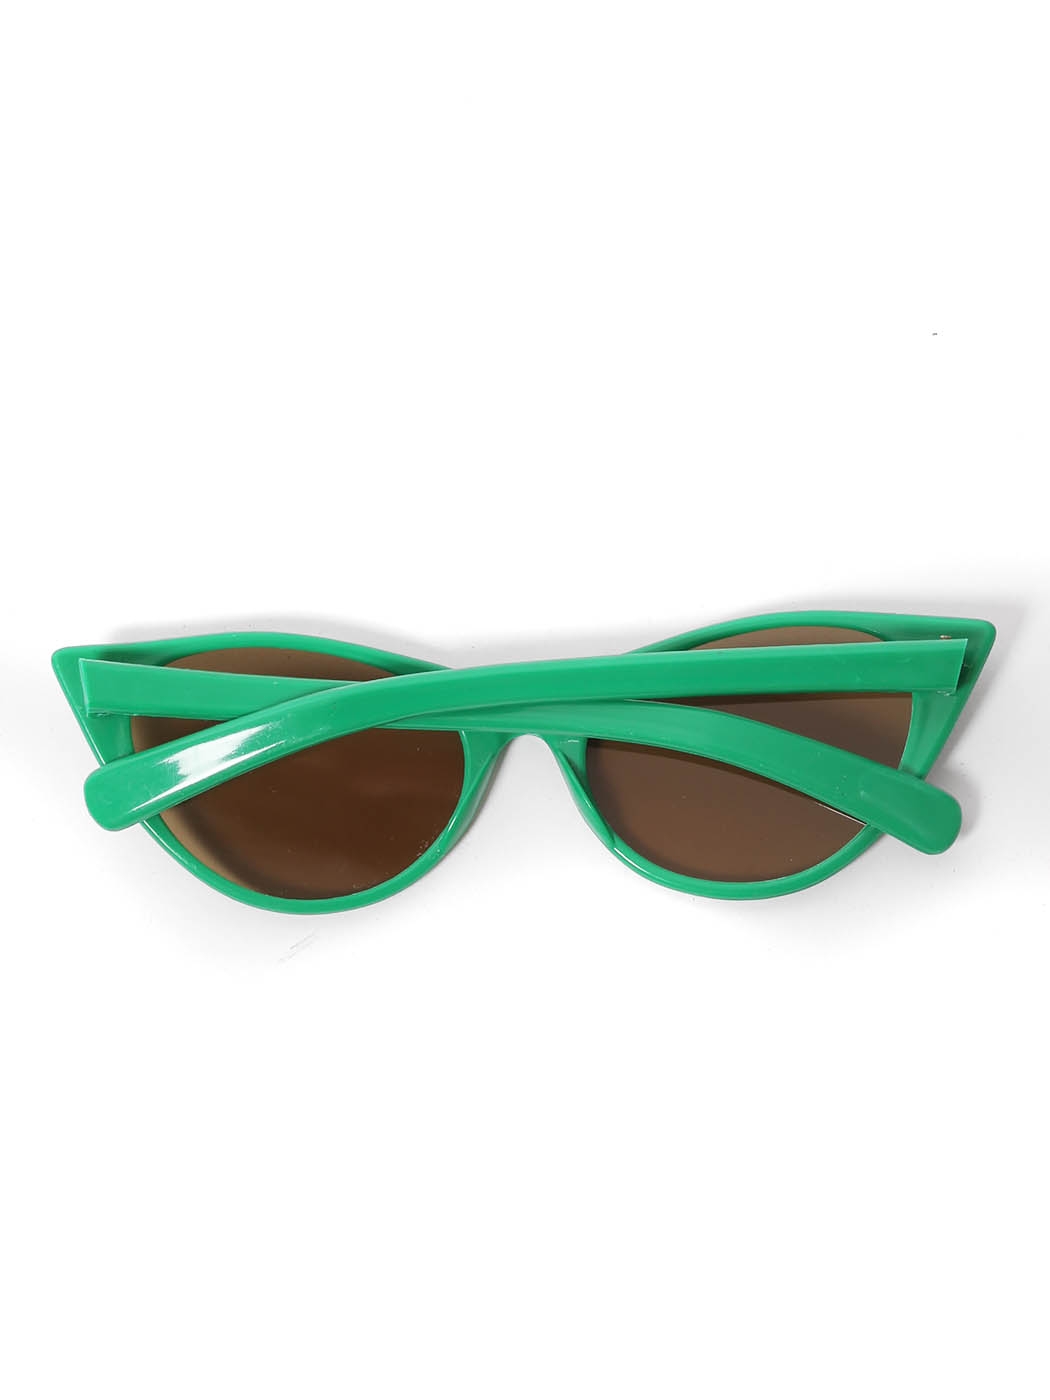 Emerald Smog Polarized Sports Sunglasses for Men & Women - Lifetime  Warranty - Ideal for Men & Women in Fishing, Boating, Beach,  Mountaineering, and Golf - Dark Ink Frame & Green Lens